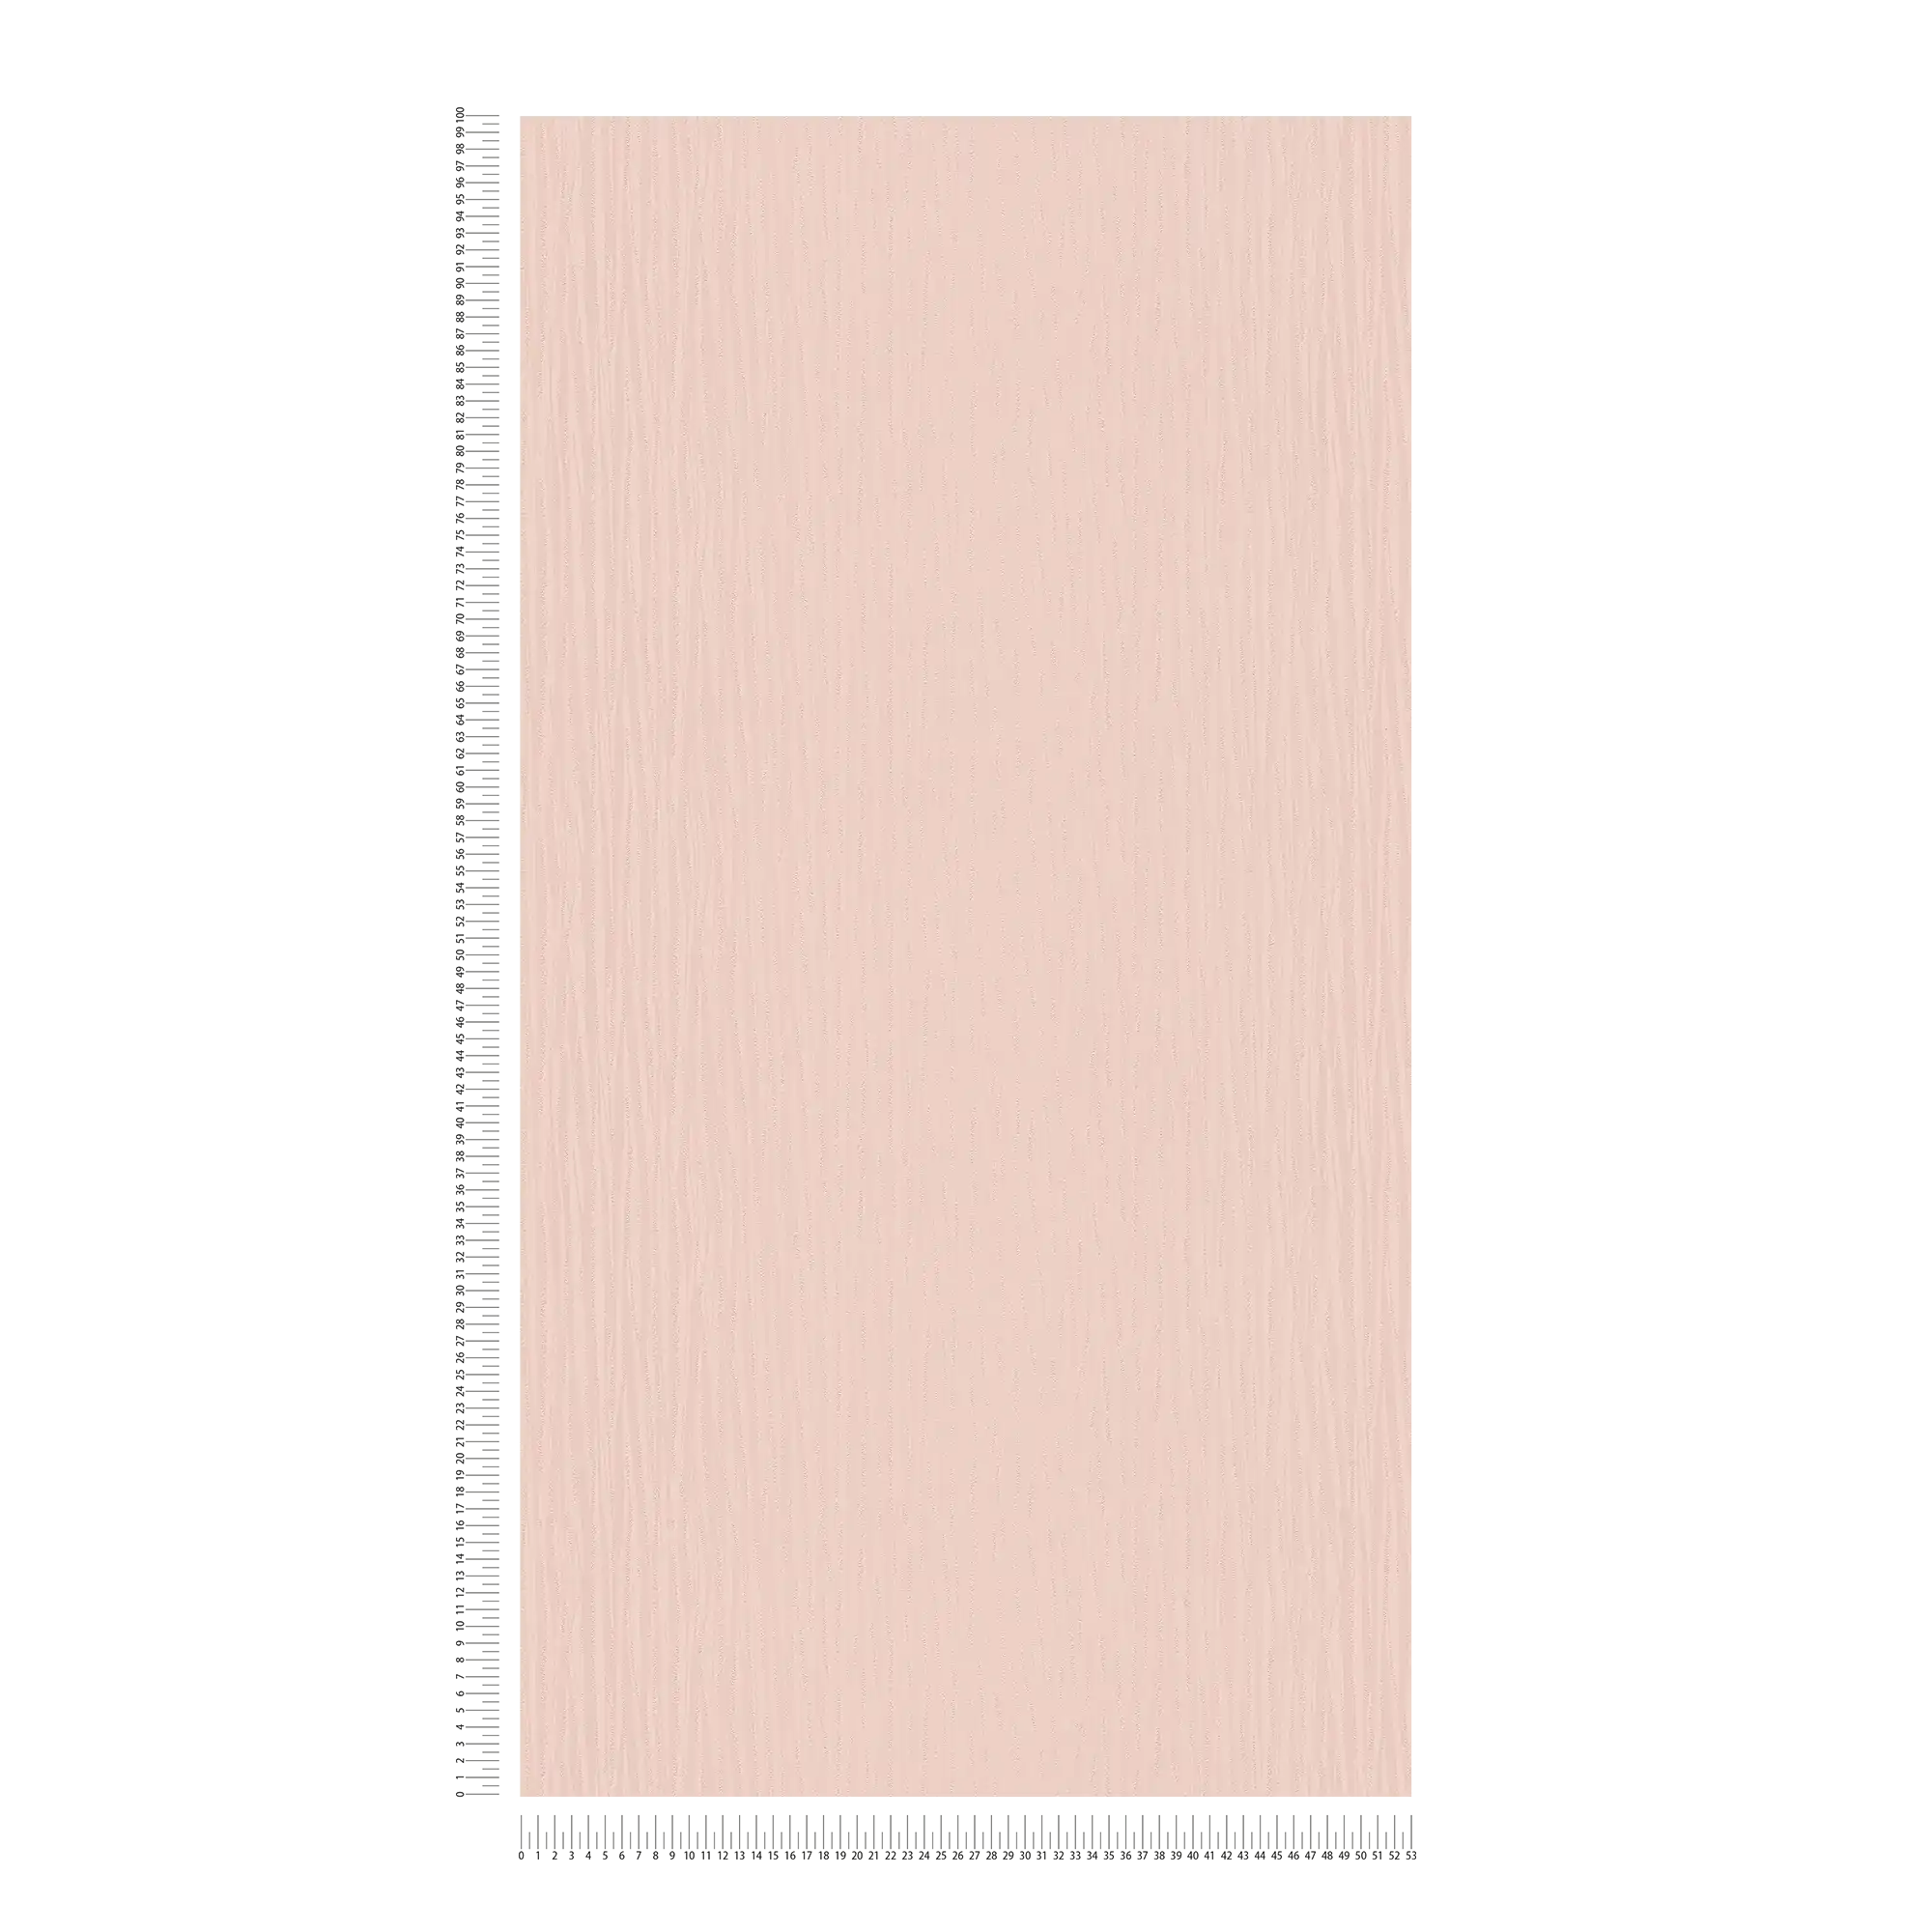             Vliesbehang roze pastel met metallic glans & kleurpatroon
        